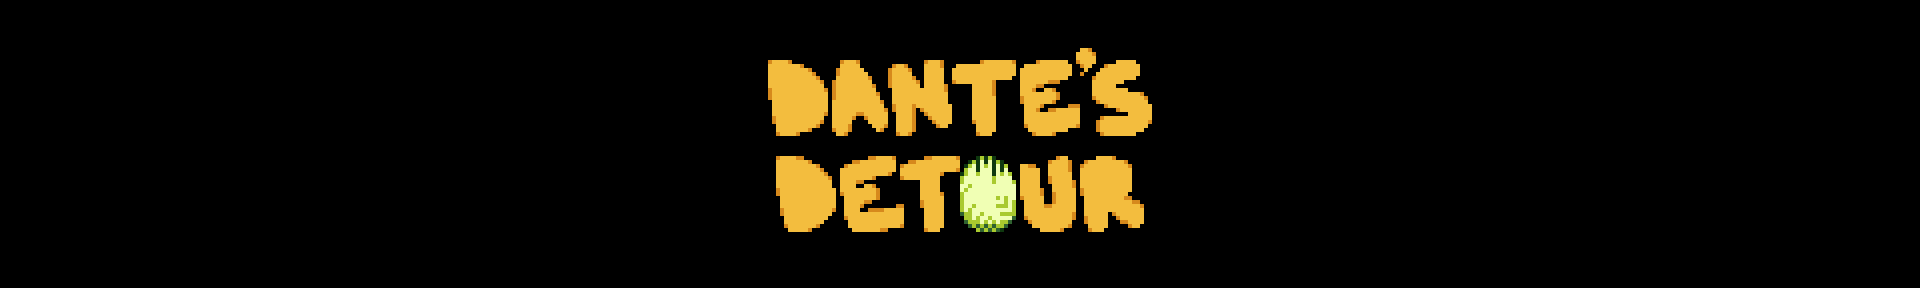 Dante's Detour - Chapter I